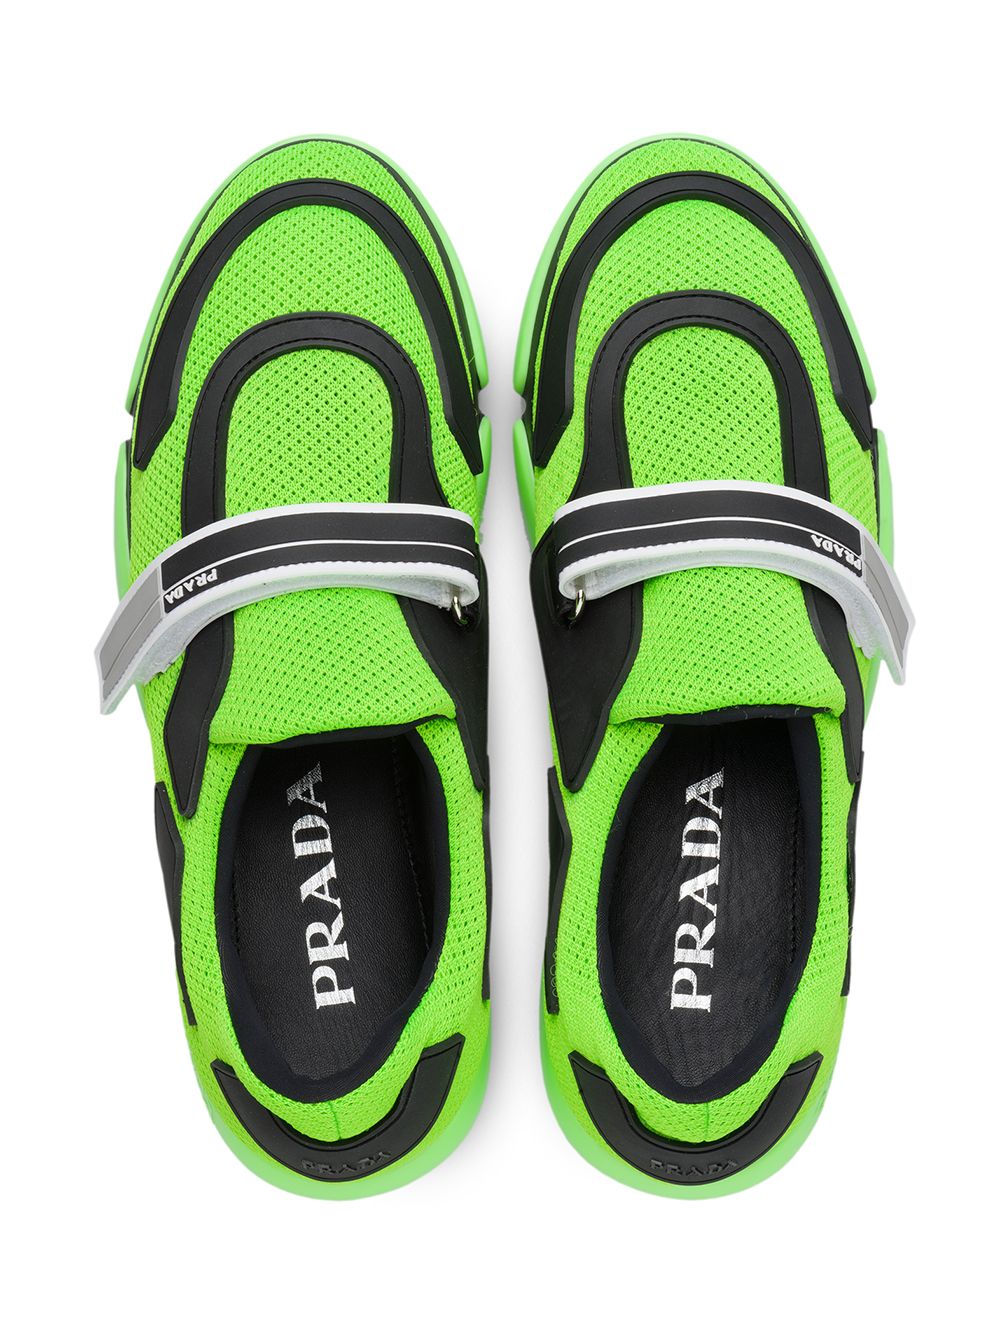 neon prada shoes